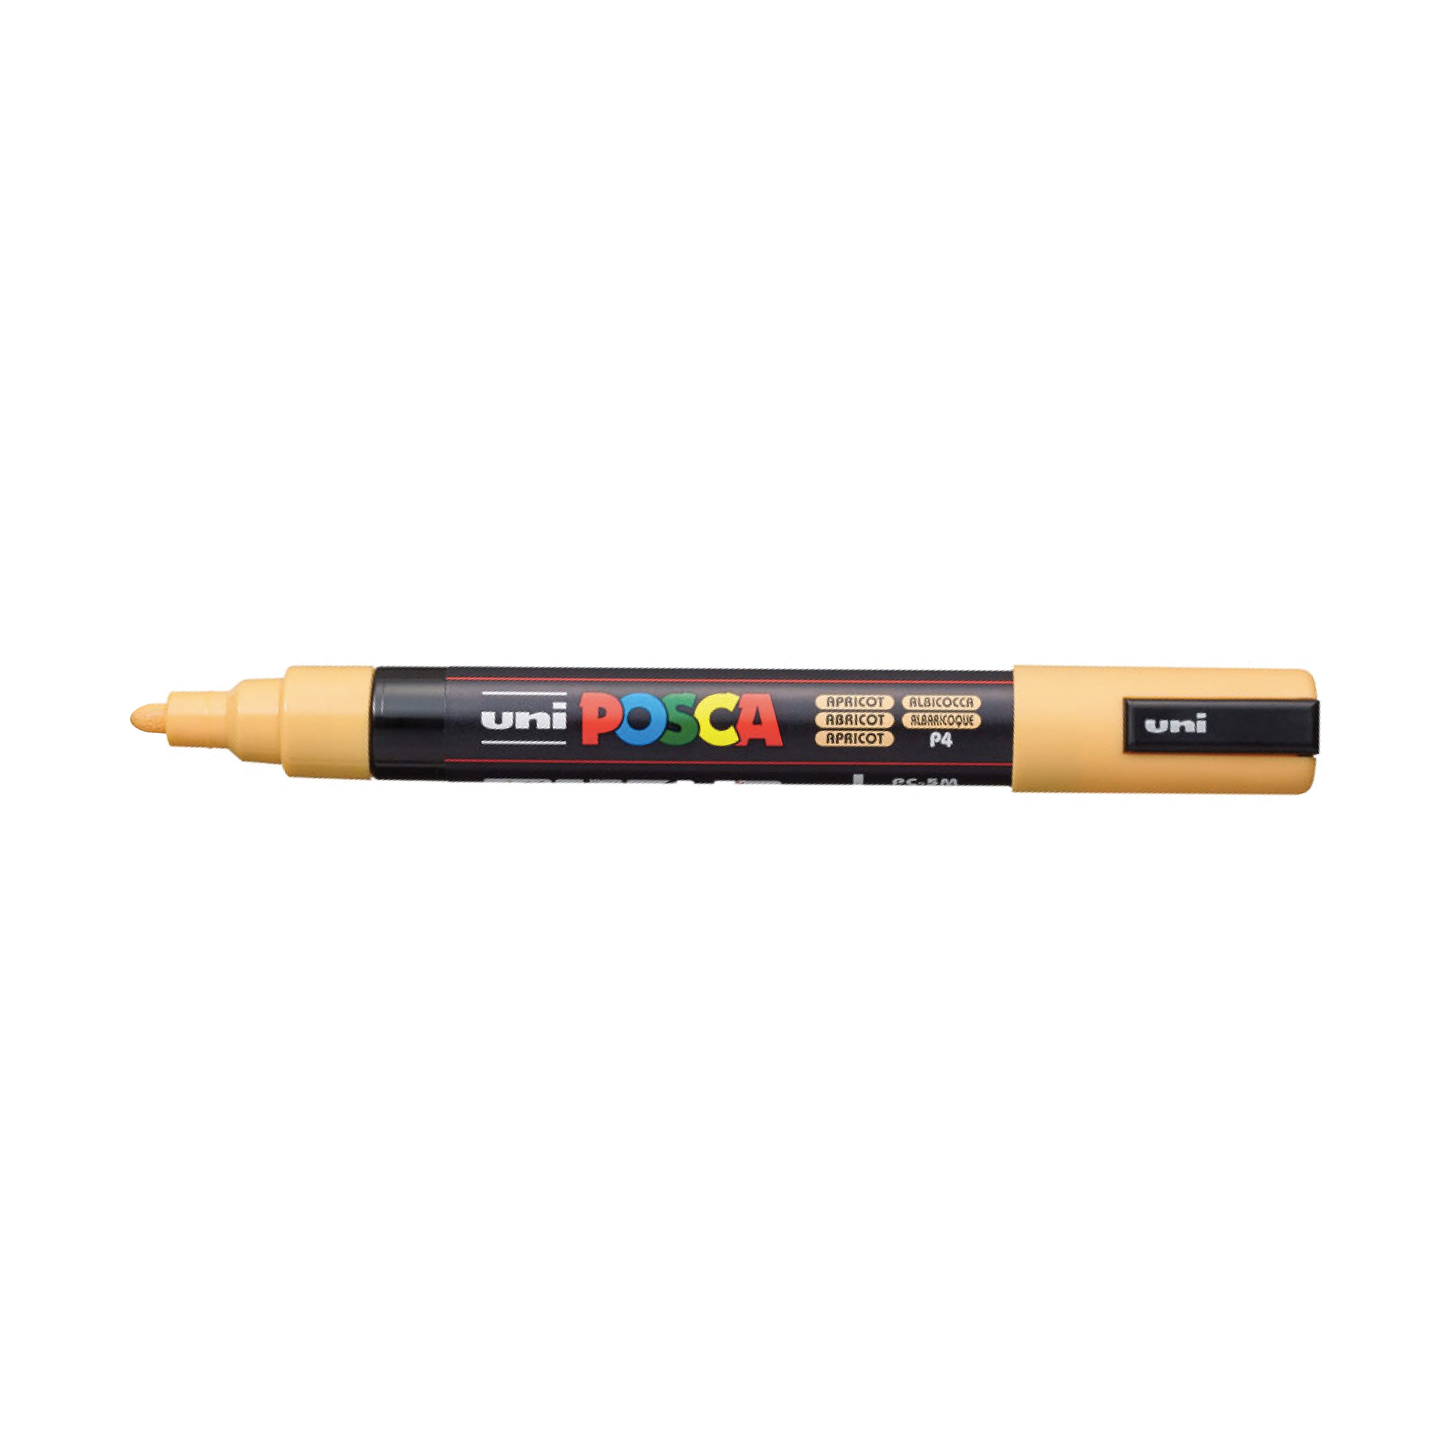 Posca Paint Marker (PC-5M)